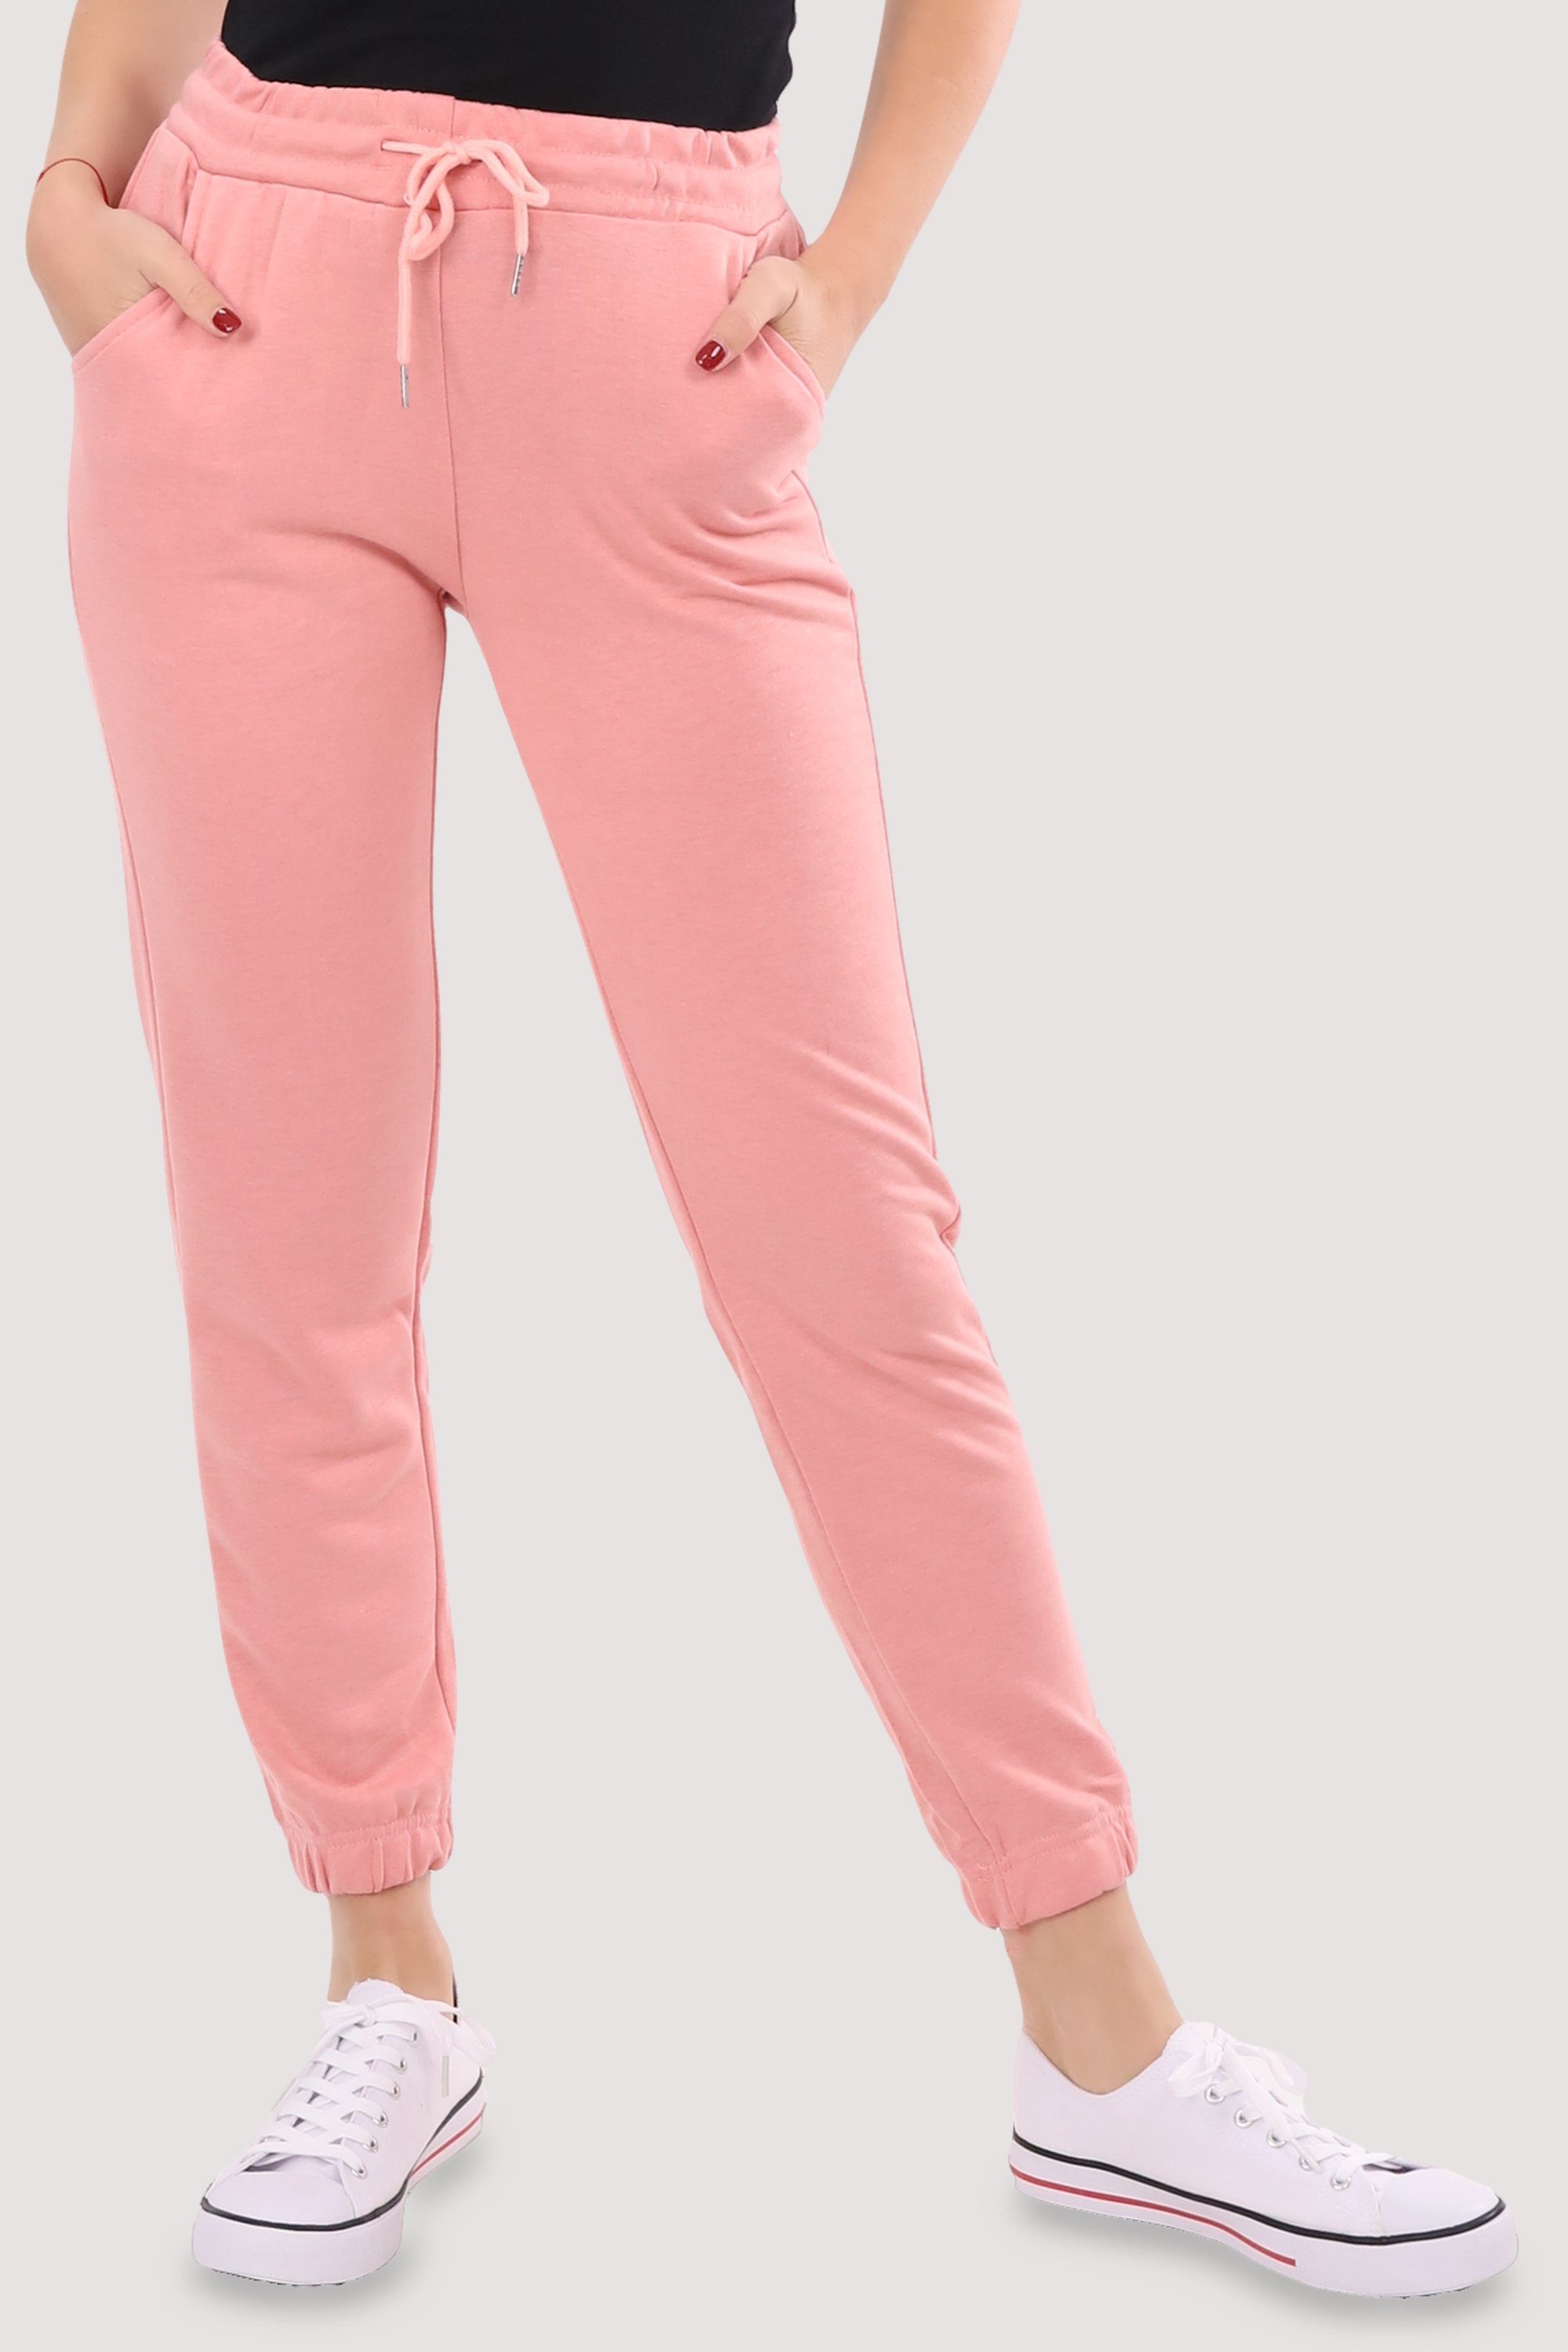 Slim Unifarben Jogginghose fashion malito rosa more Freizeithose C-9681 Fit than Sweathose